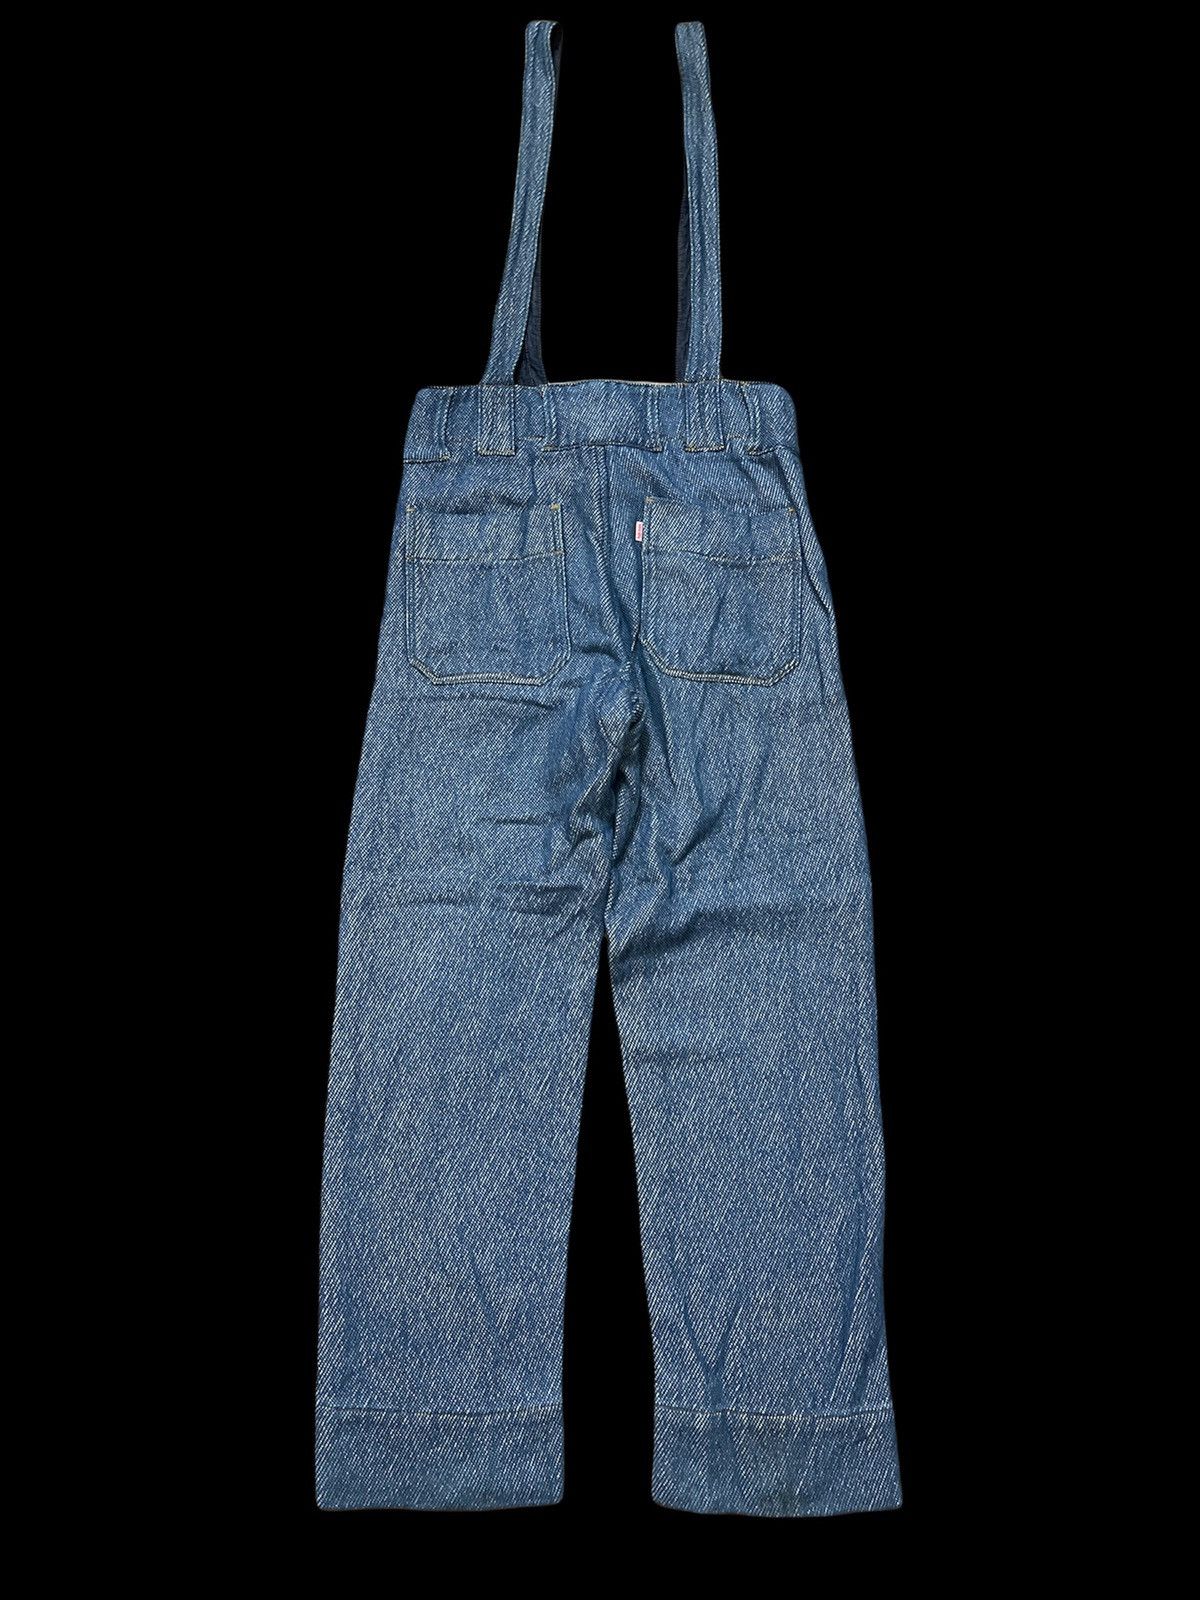 Issey Miyake Ne-Net by Issey Miyake Suspender Overall Pants Size US 30 / EU 46 - 3 Thumbnail